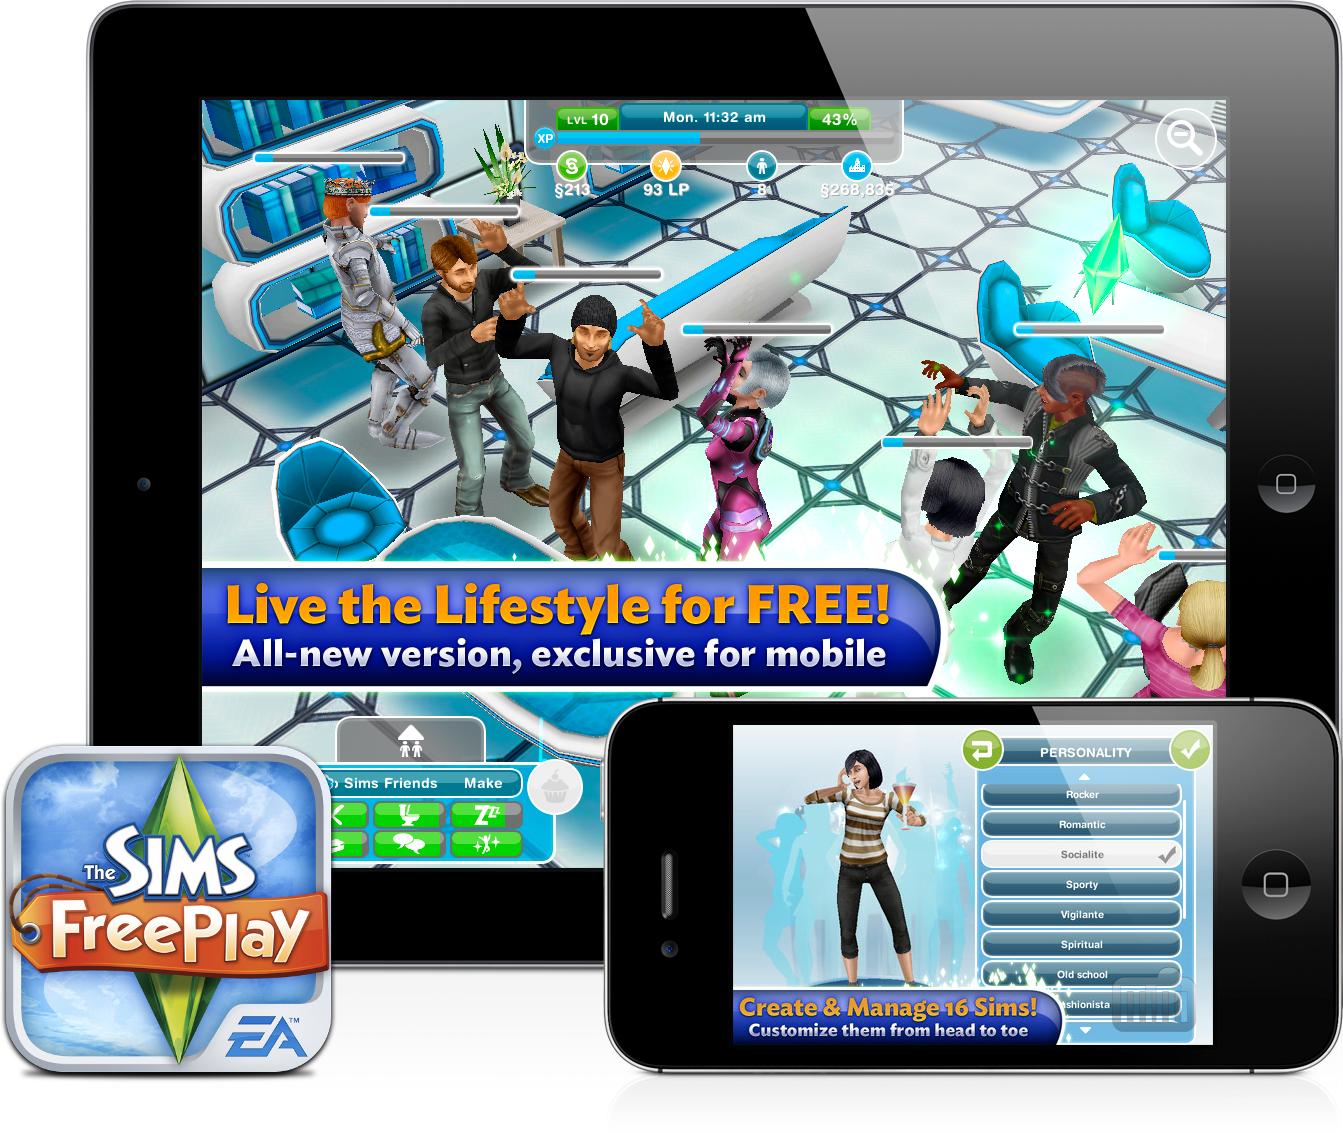 Como jogar The Sims FreePlay grátis no Android, iPhone e Windows Phone